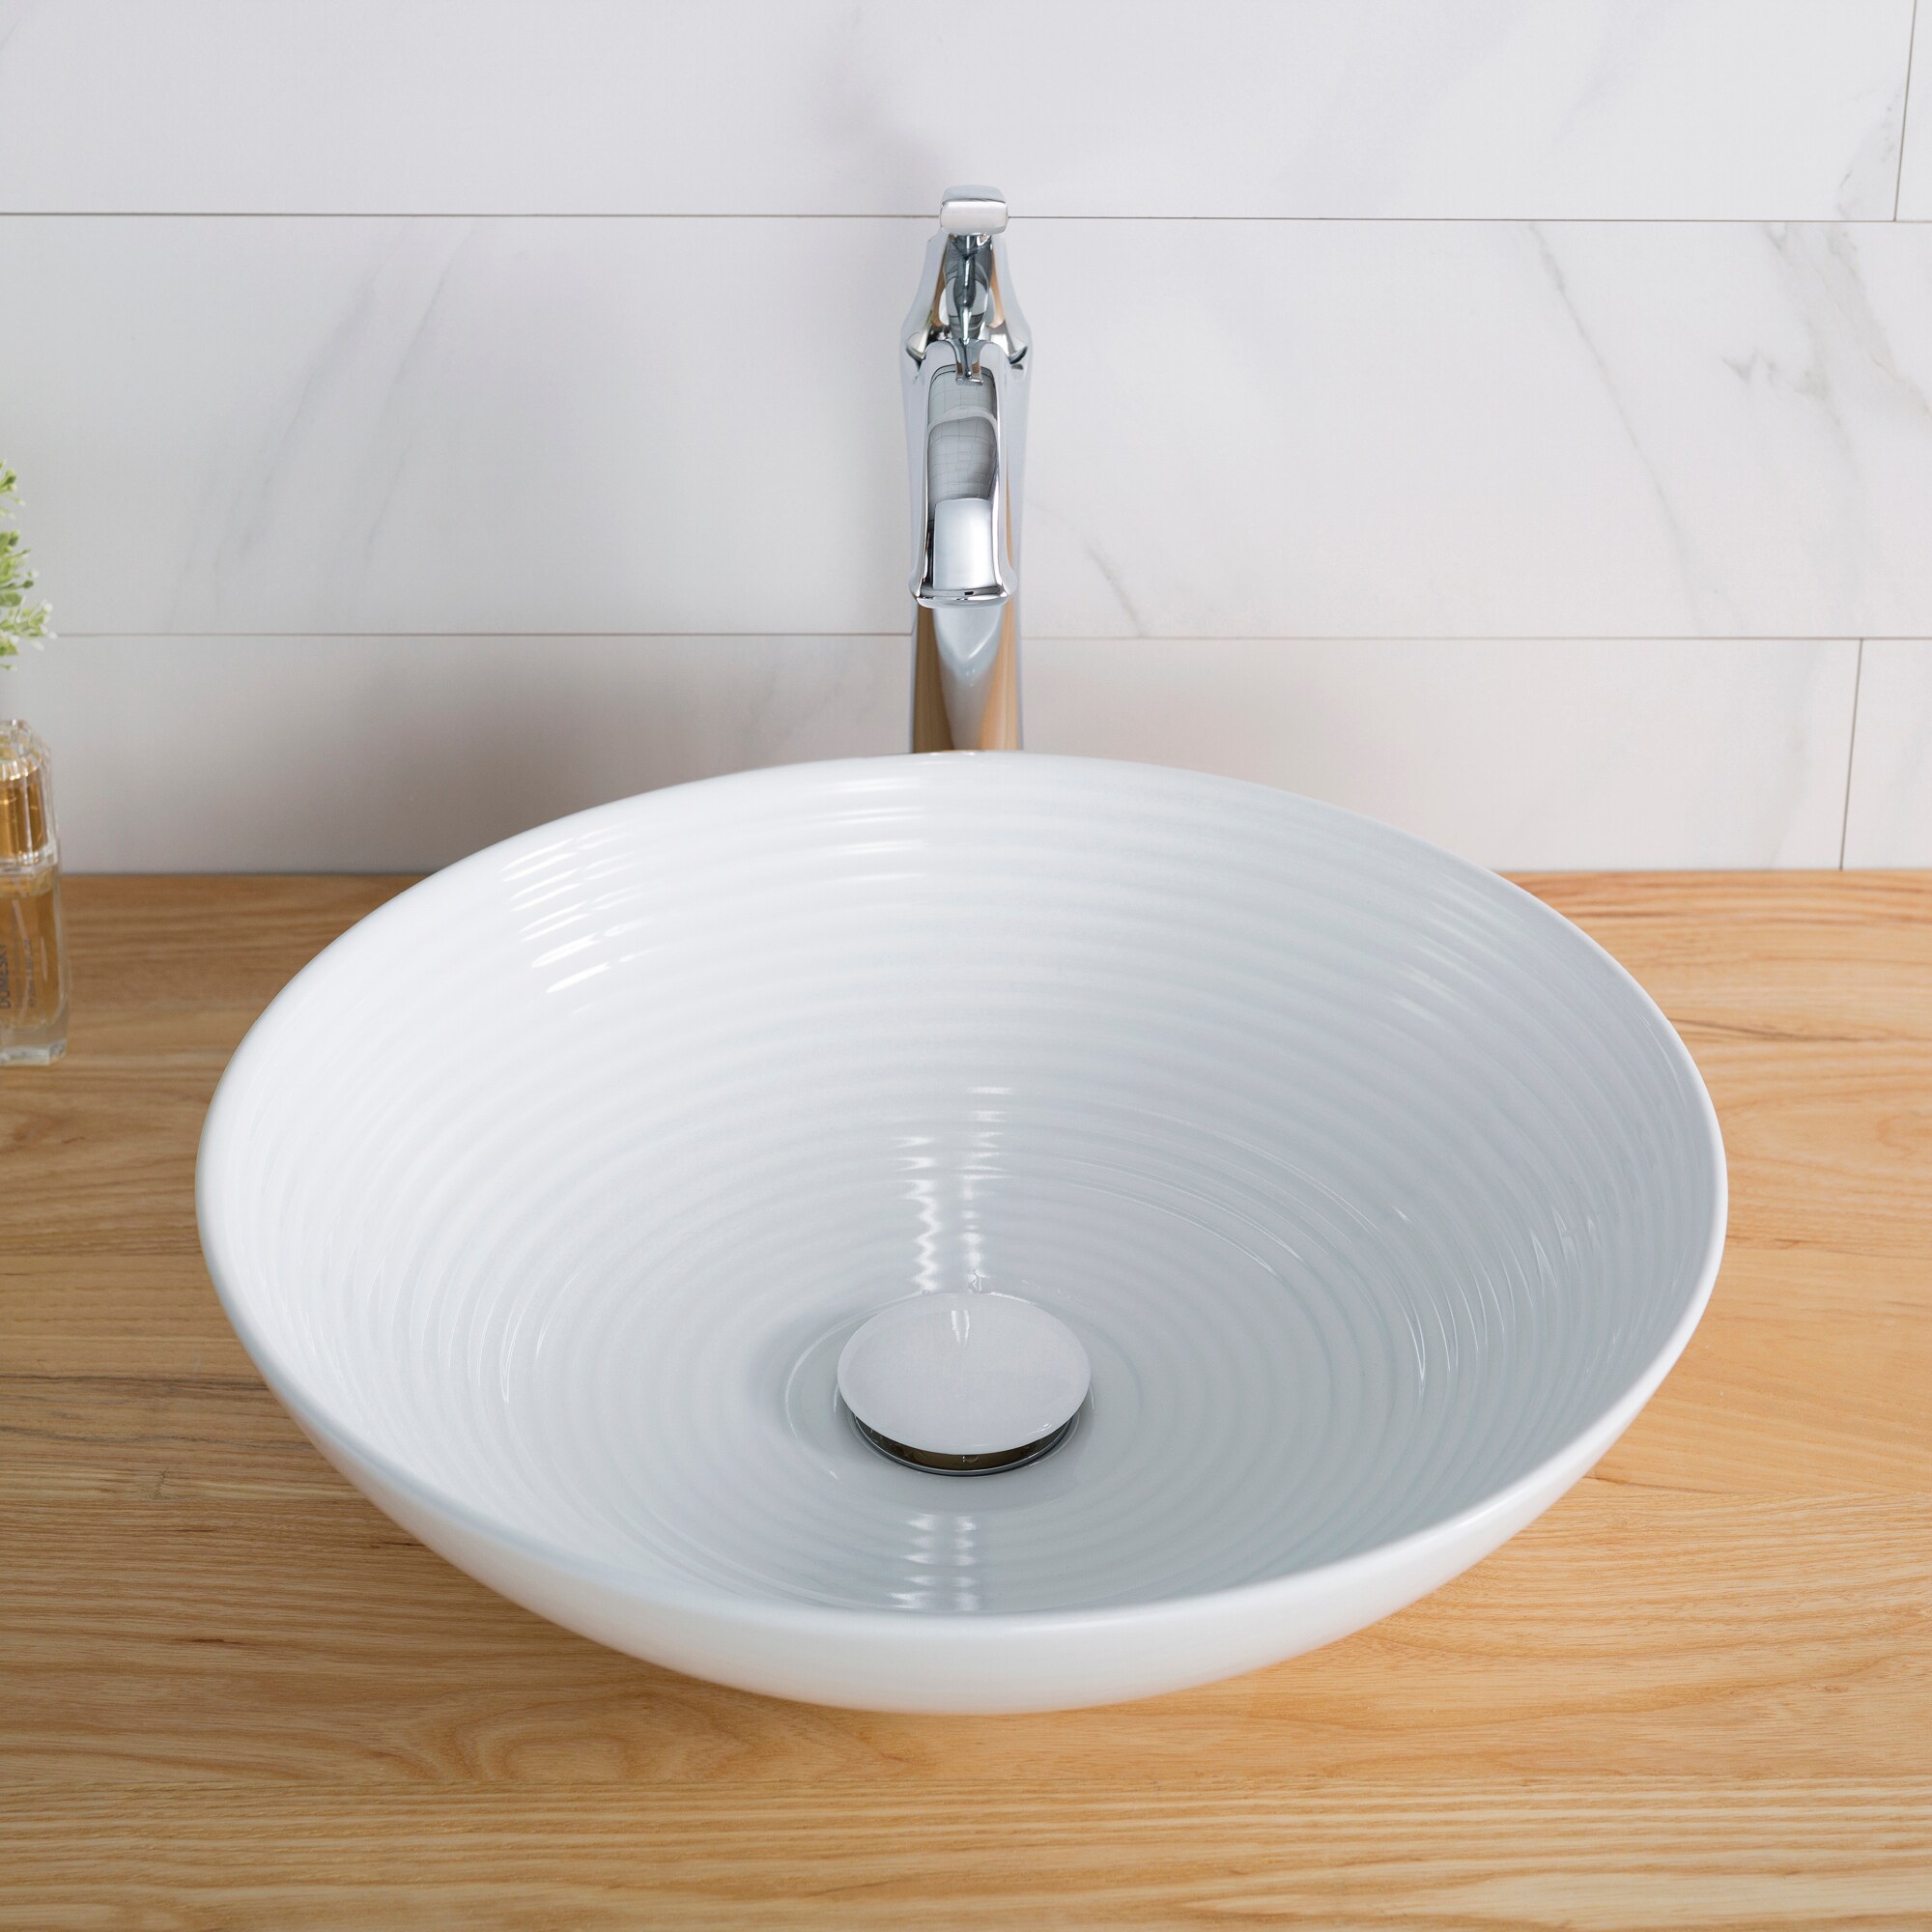 Kraus Viva White Ceramic Vessel Round Modern Bathroom Sink Drain Included (16.5-in x 16.5-in)